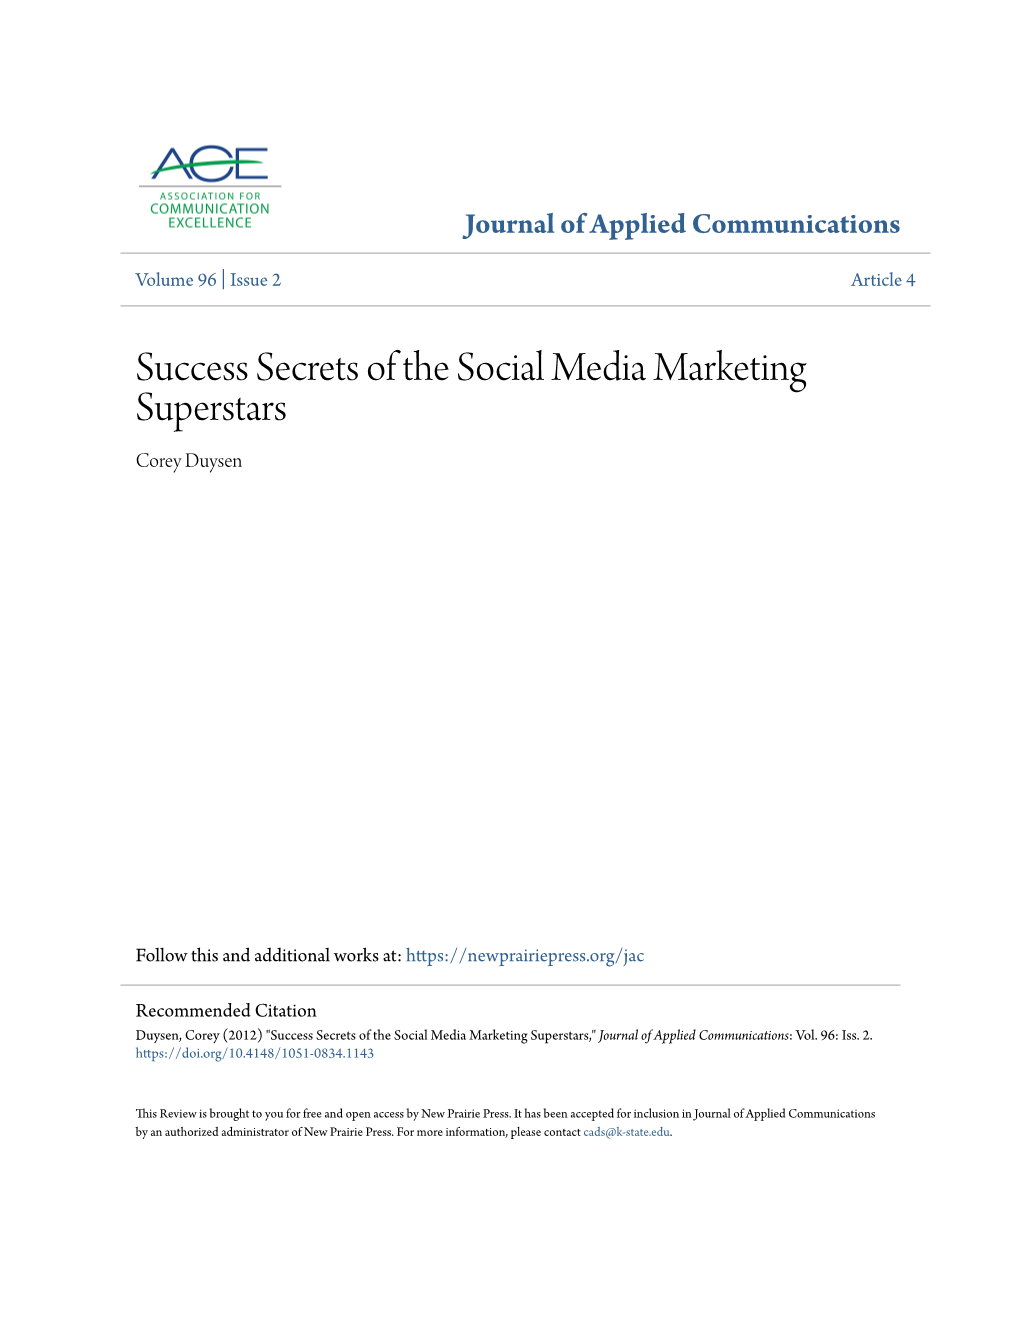 Success Secrets of the Social Media Marketing Superstars Corey Duysen